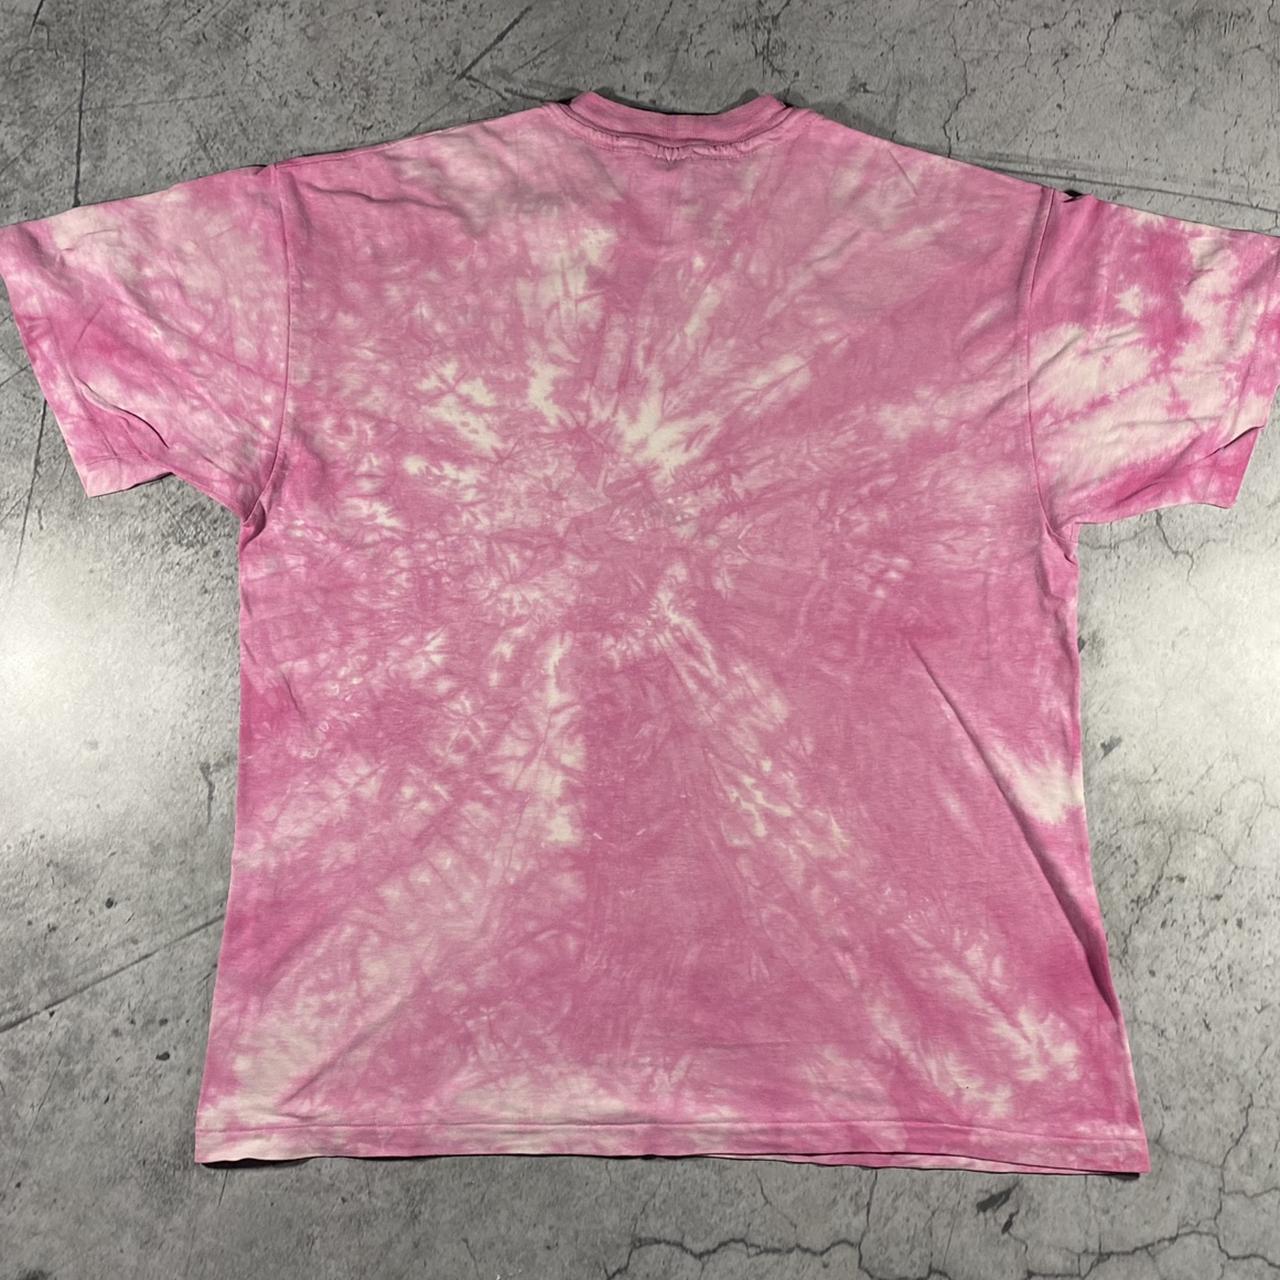 Product Image 4 - 90s vintage pink tie dye